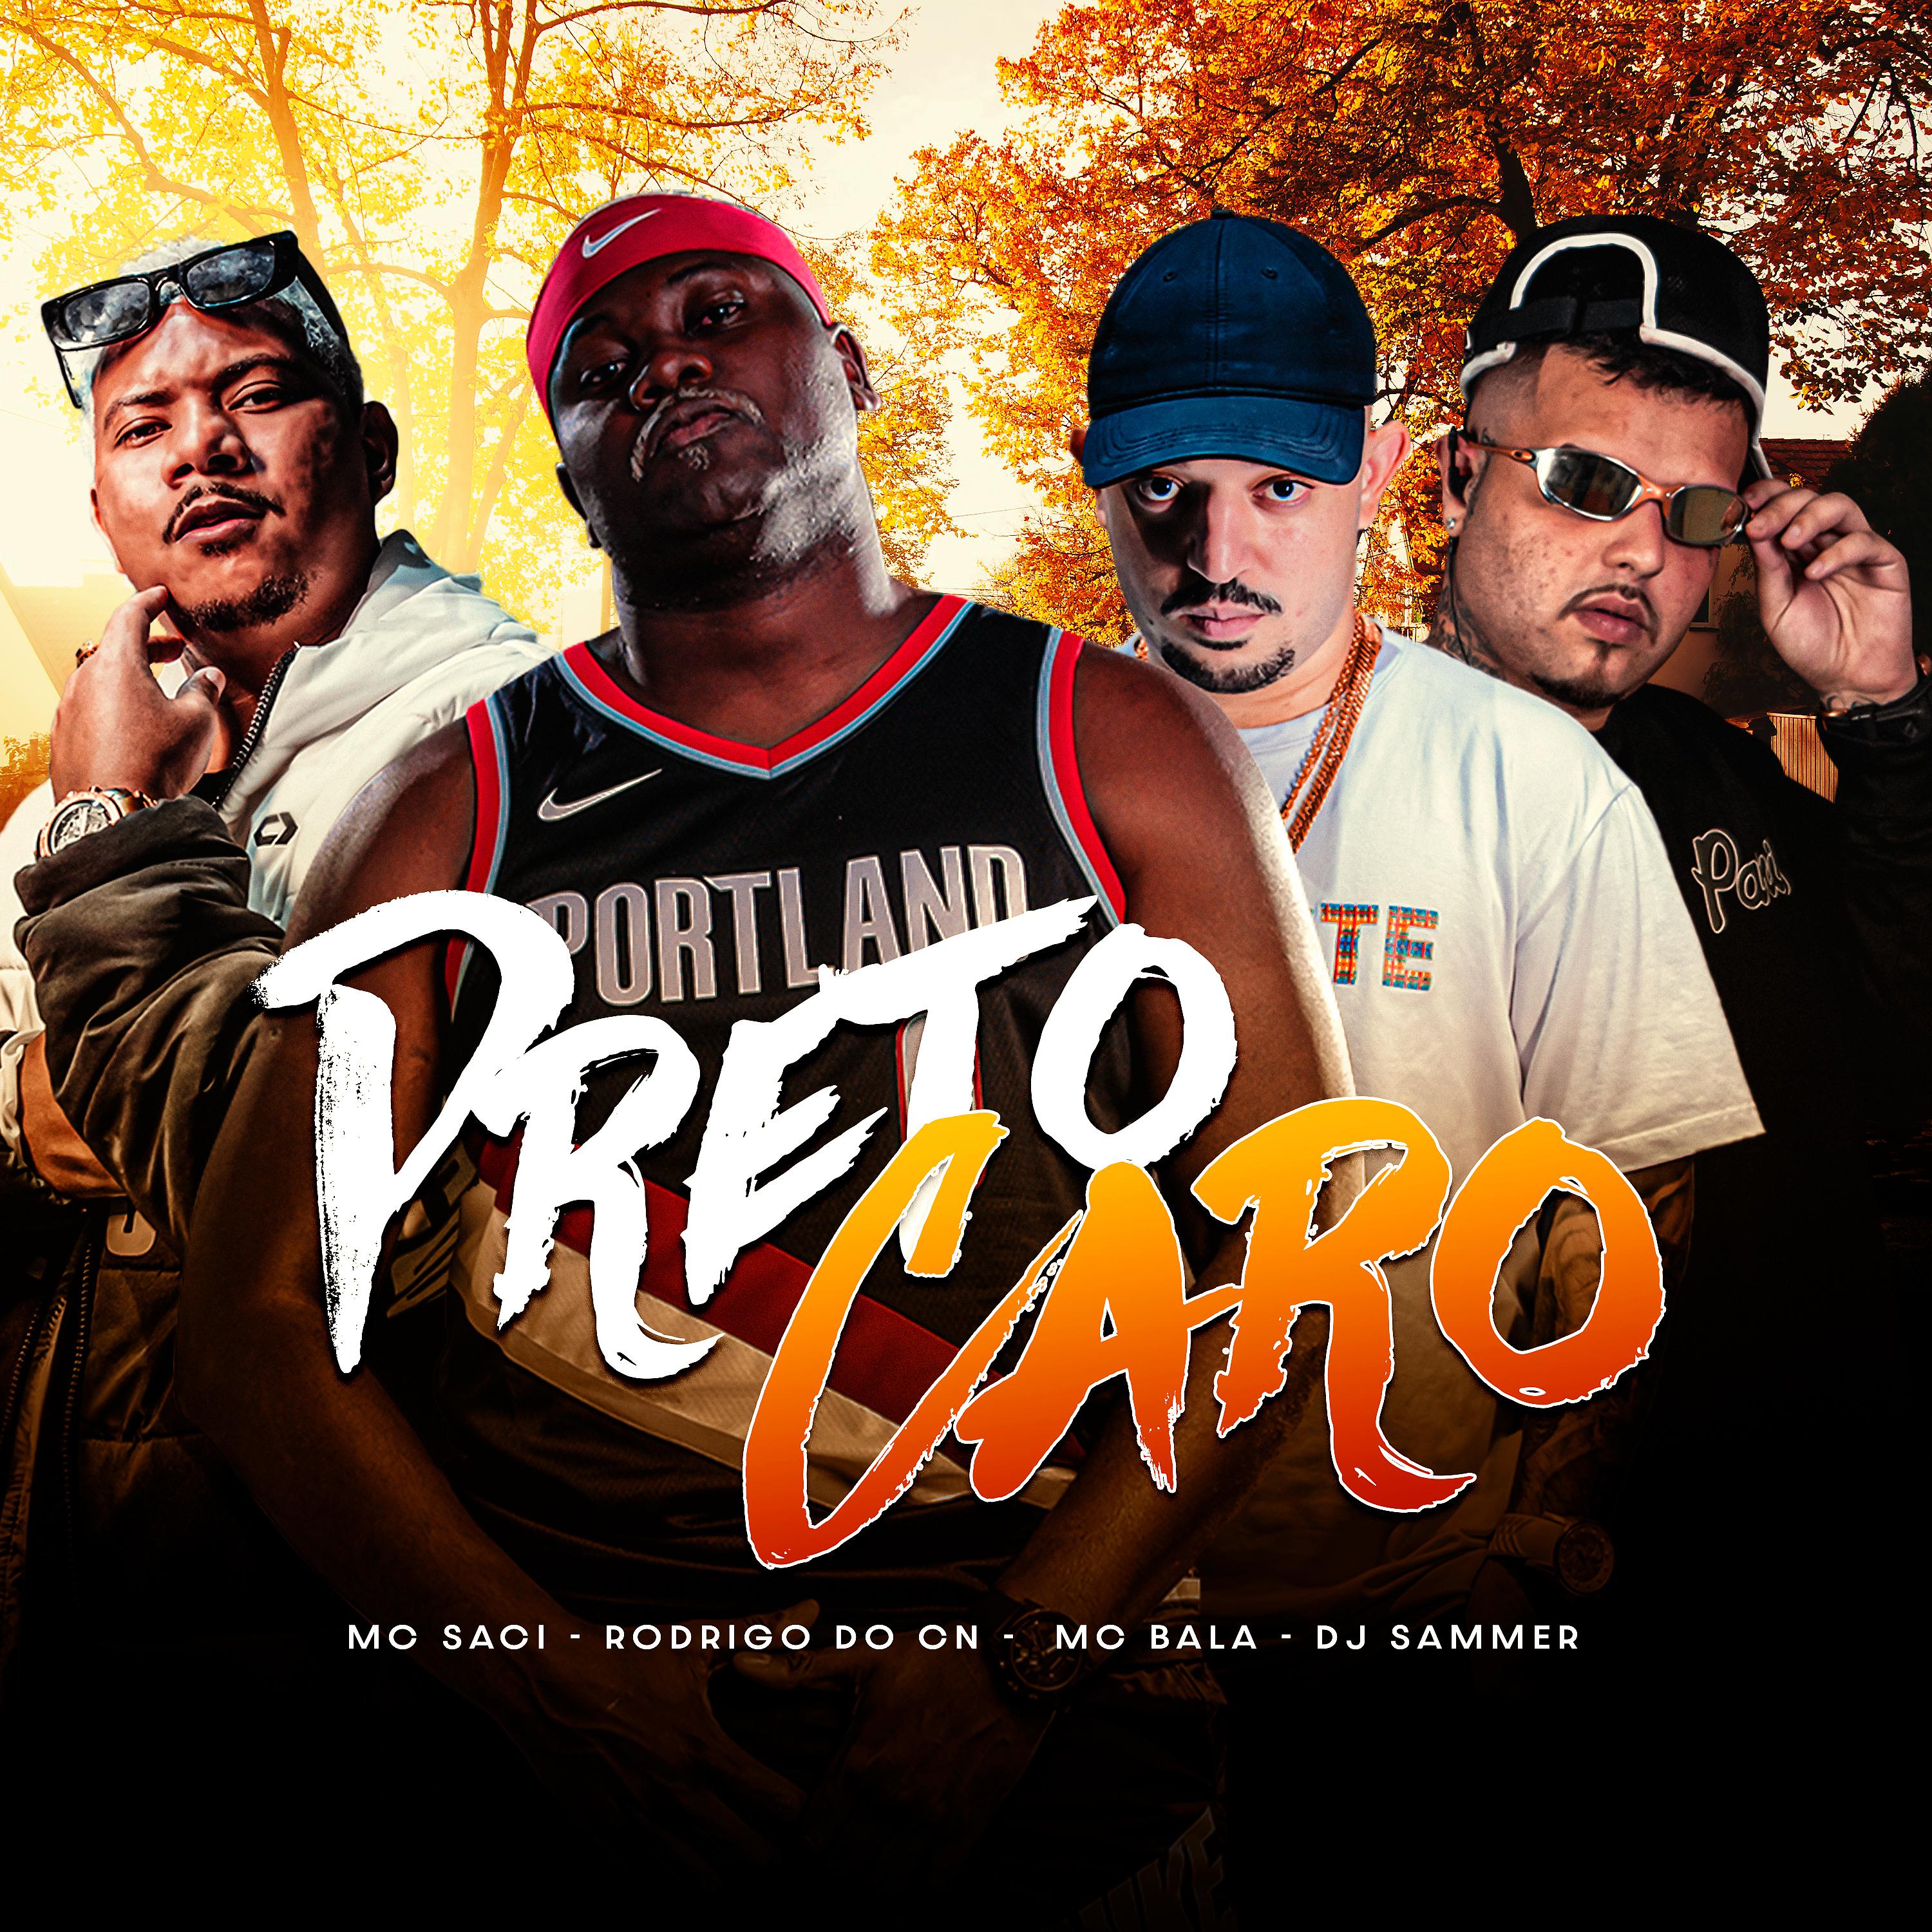 Постер альбома Preto Caro